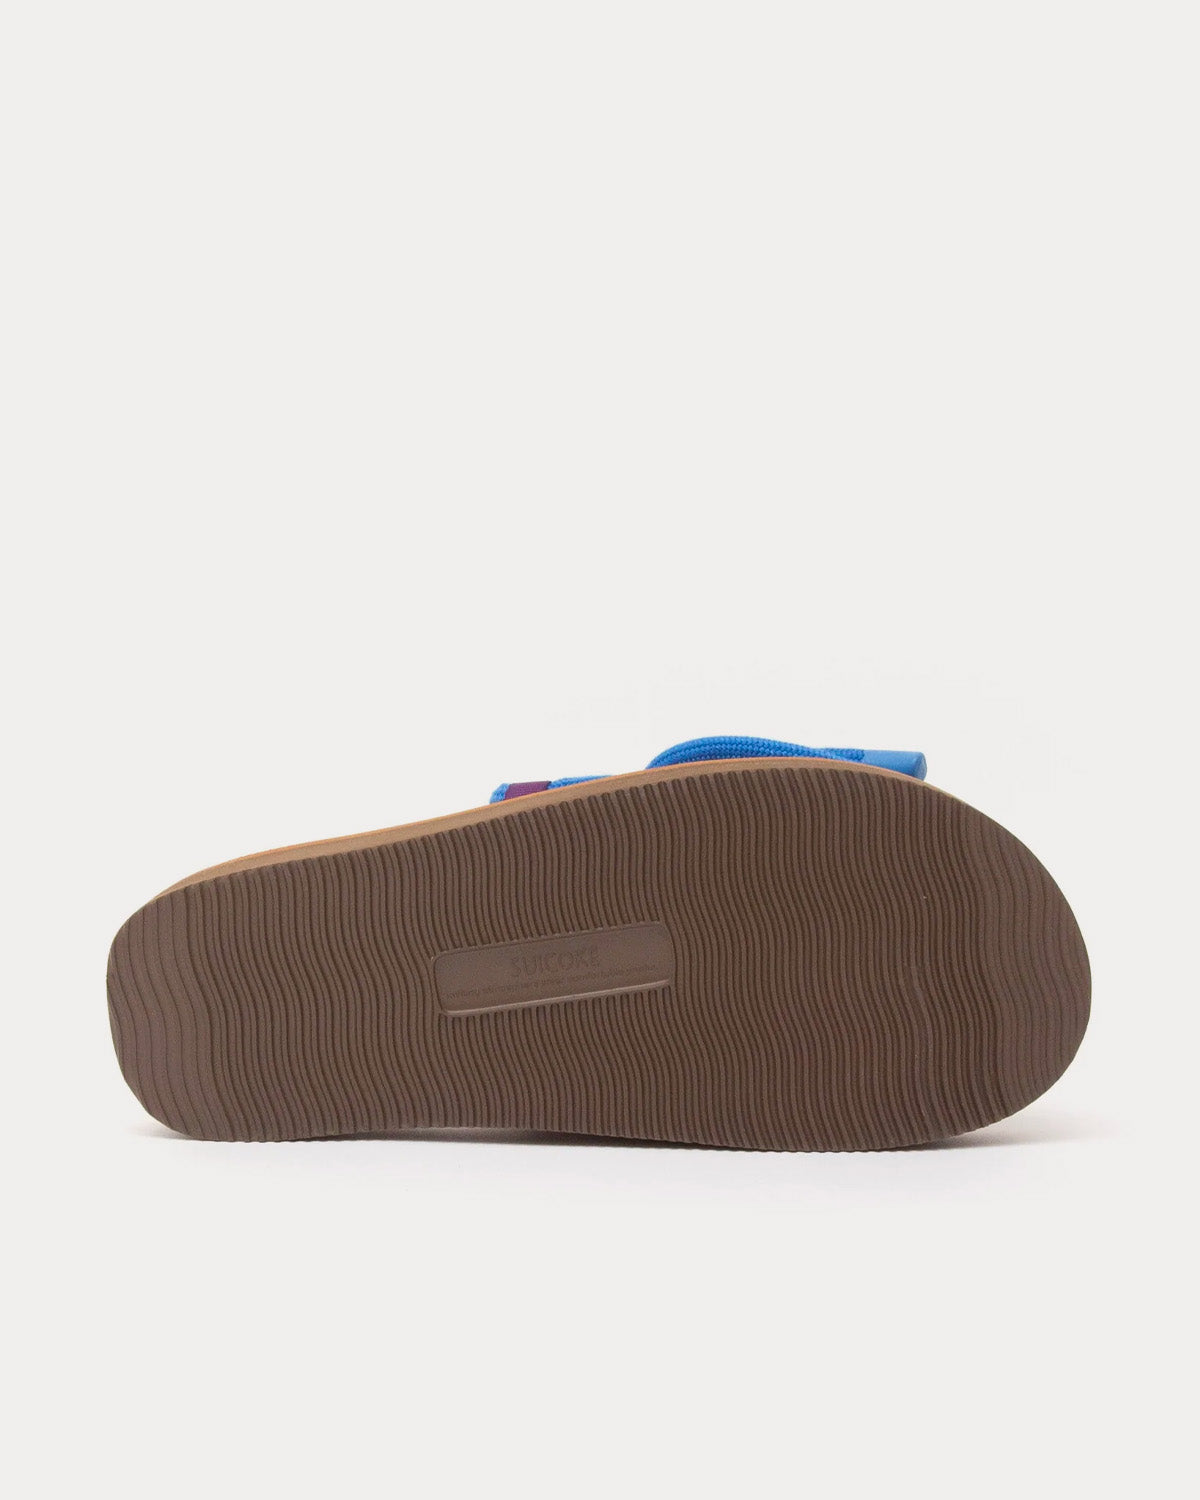 Suicoke x KidSuper - Moto Tan / Brown Sandals